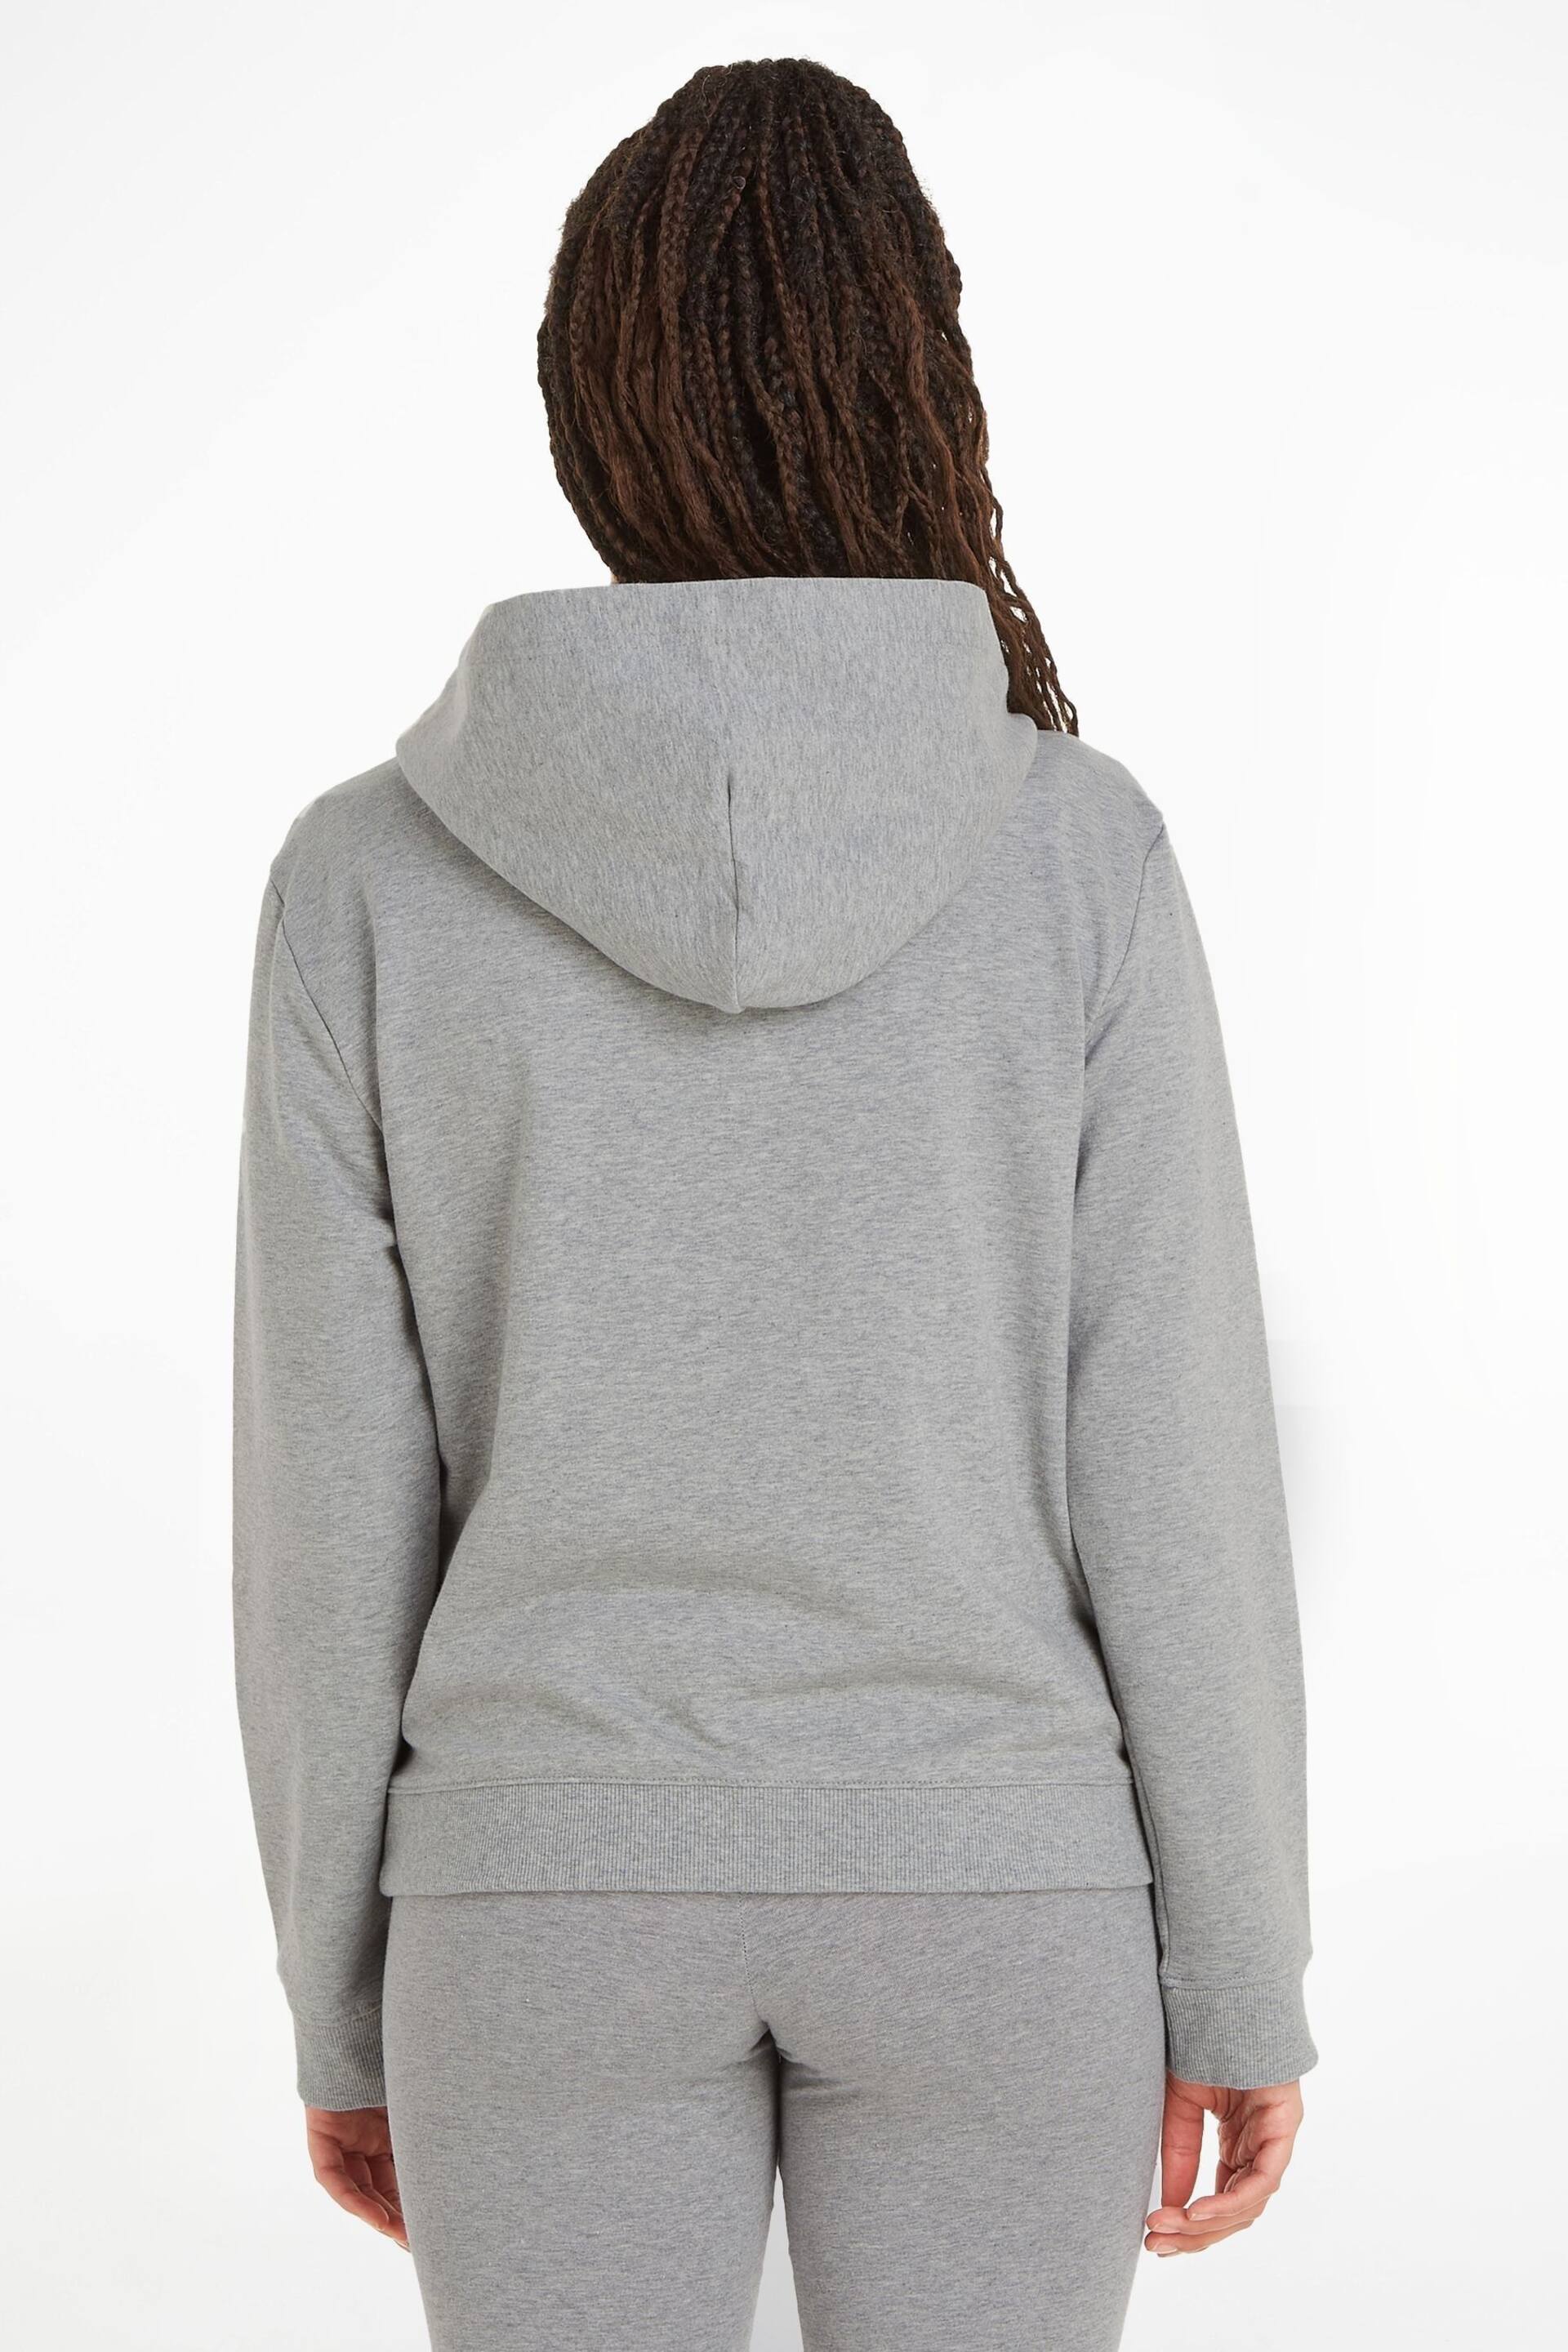 Calvin Klein Grey Modern Cotton Loungewear Full Zip Hoodie - Image 2 of 6